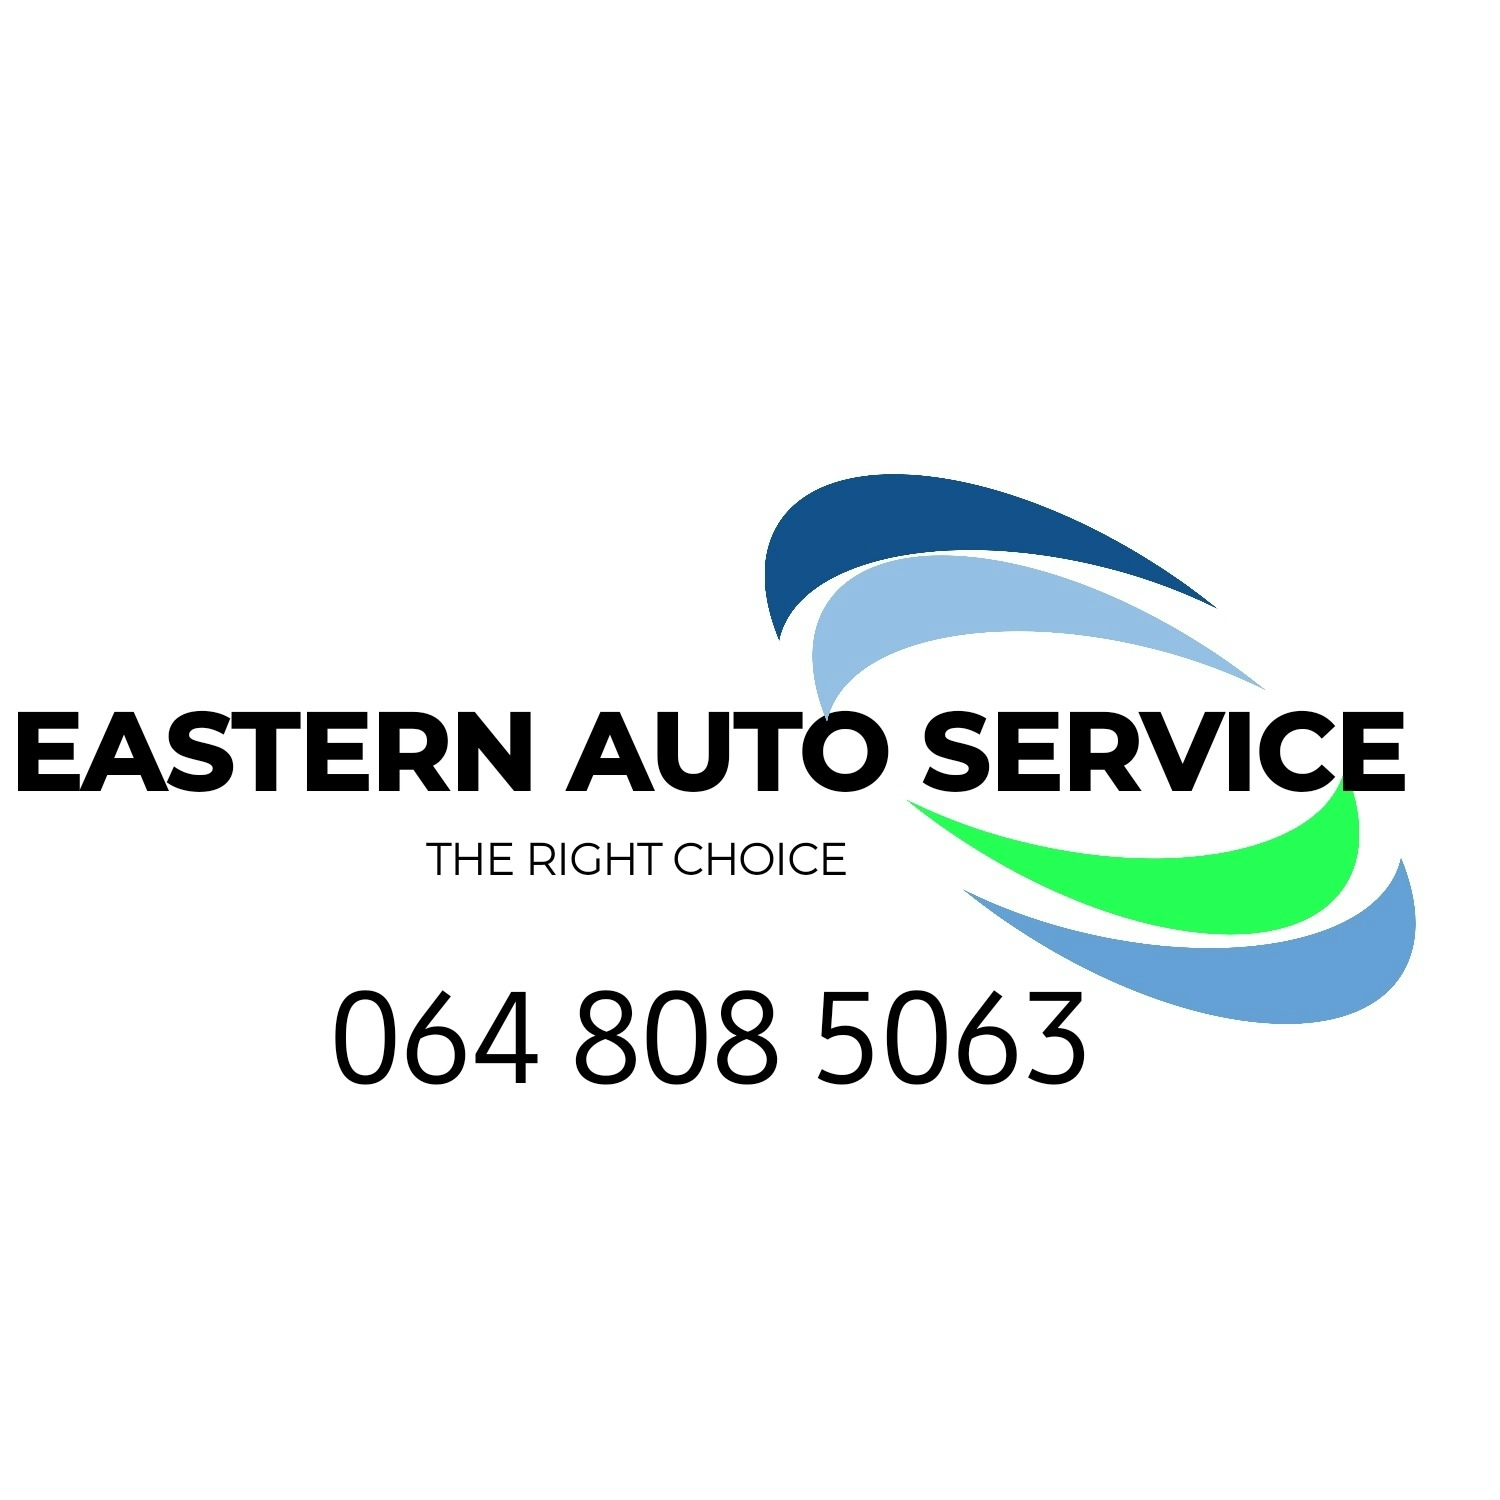 Eastern Auto Service